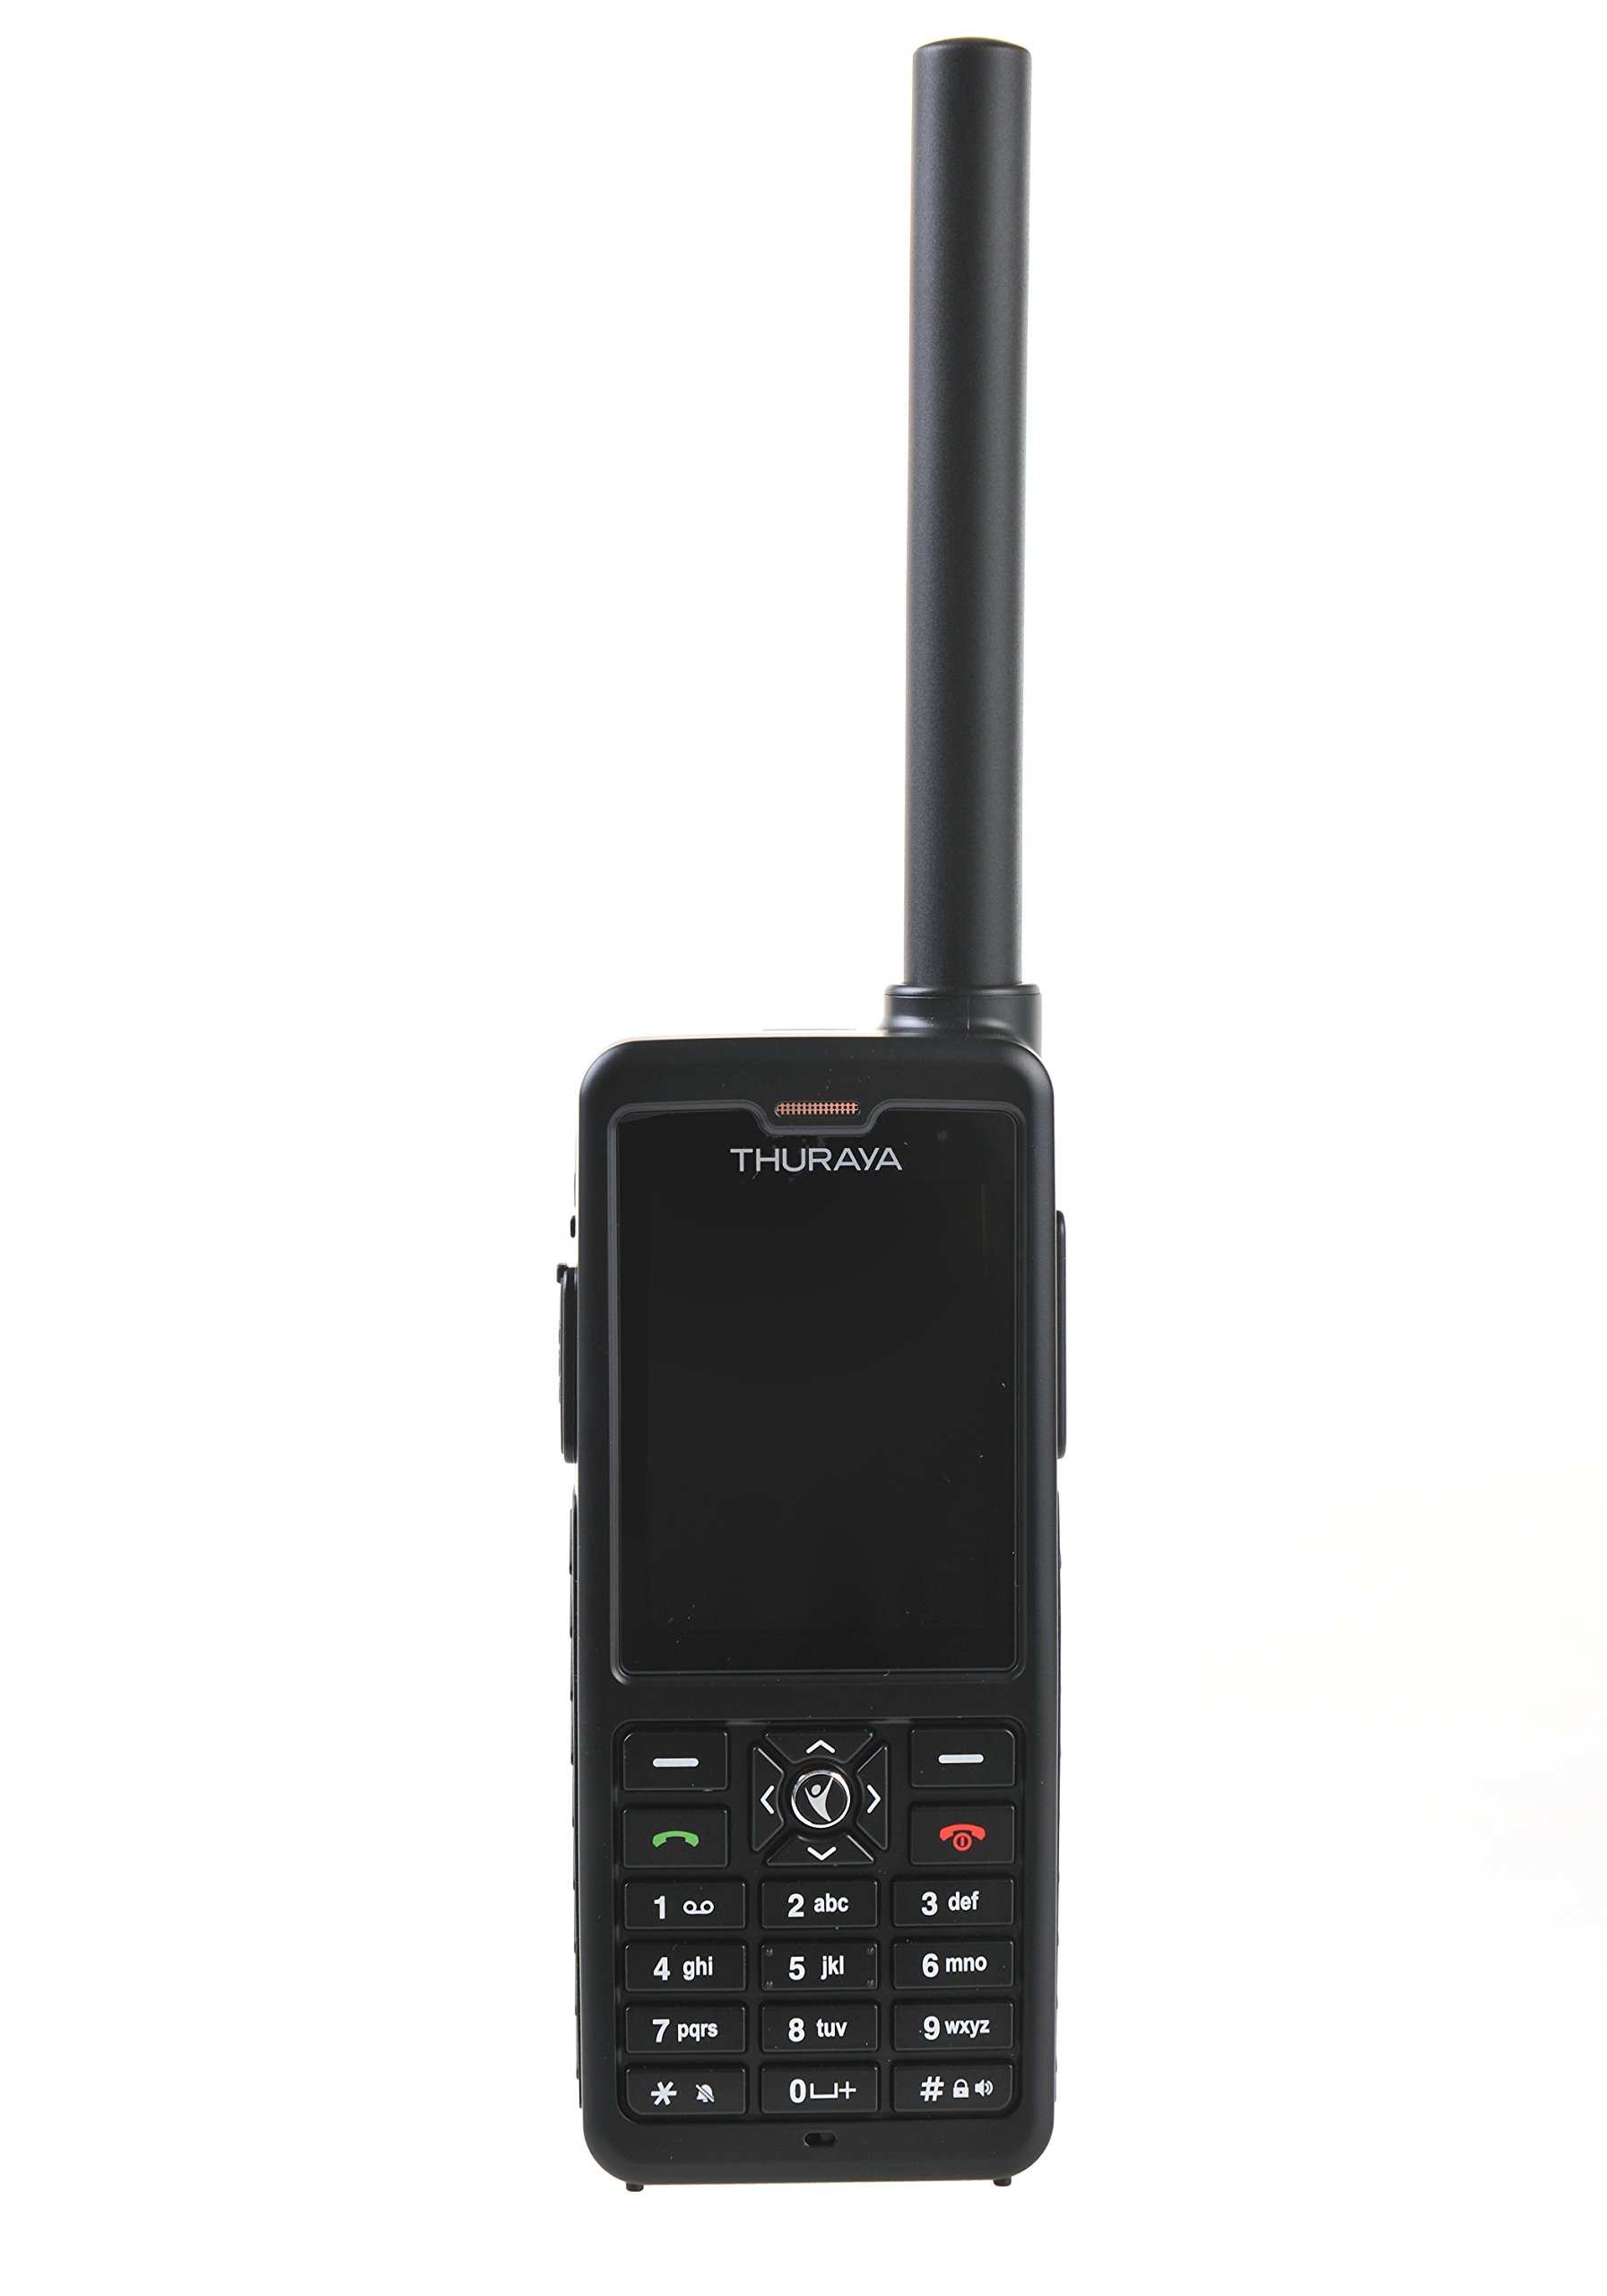 OSAT Thuraya XT Pro Satellite Phone & NOVA SIM with 60 Units (70 Minutes) with 365 Day Validity